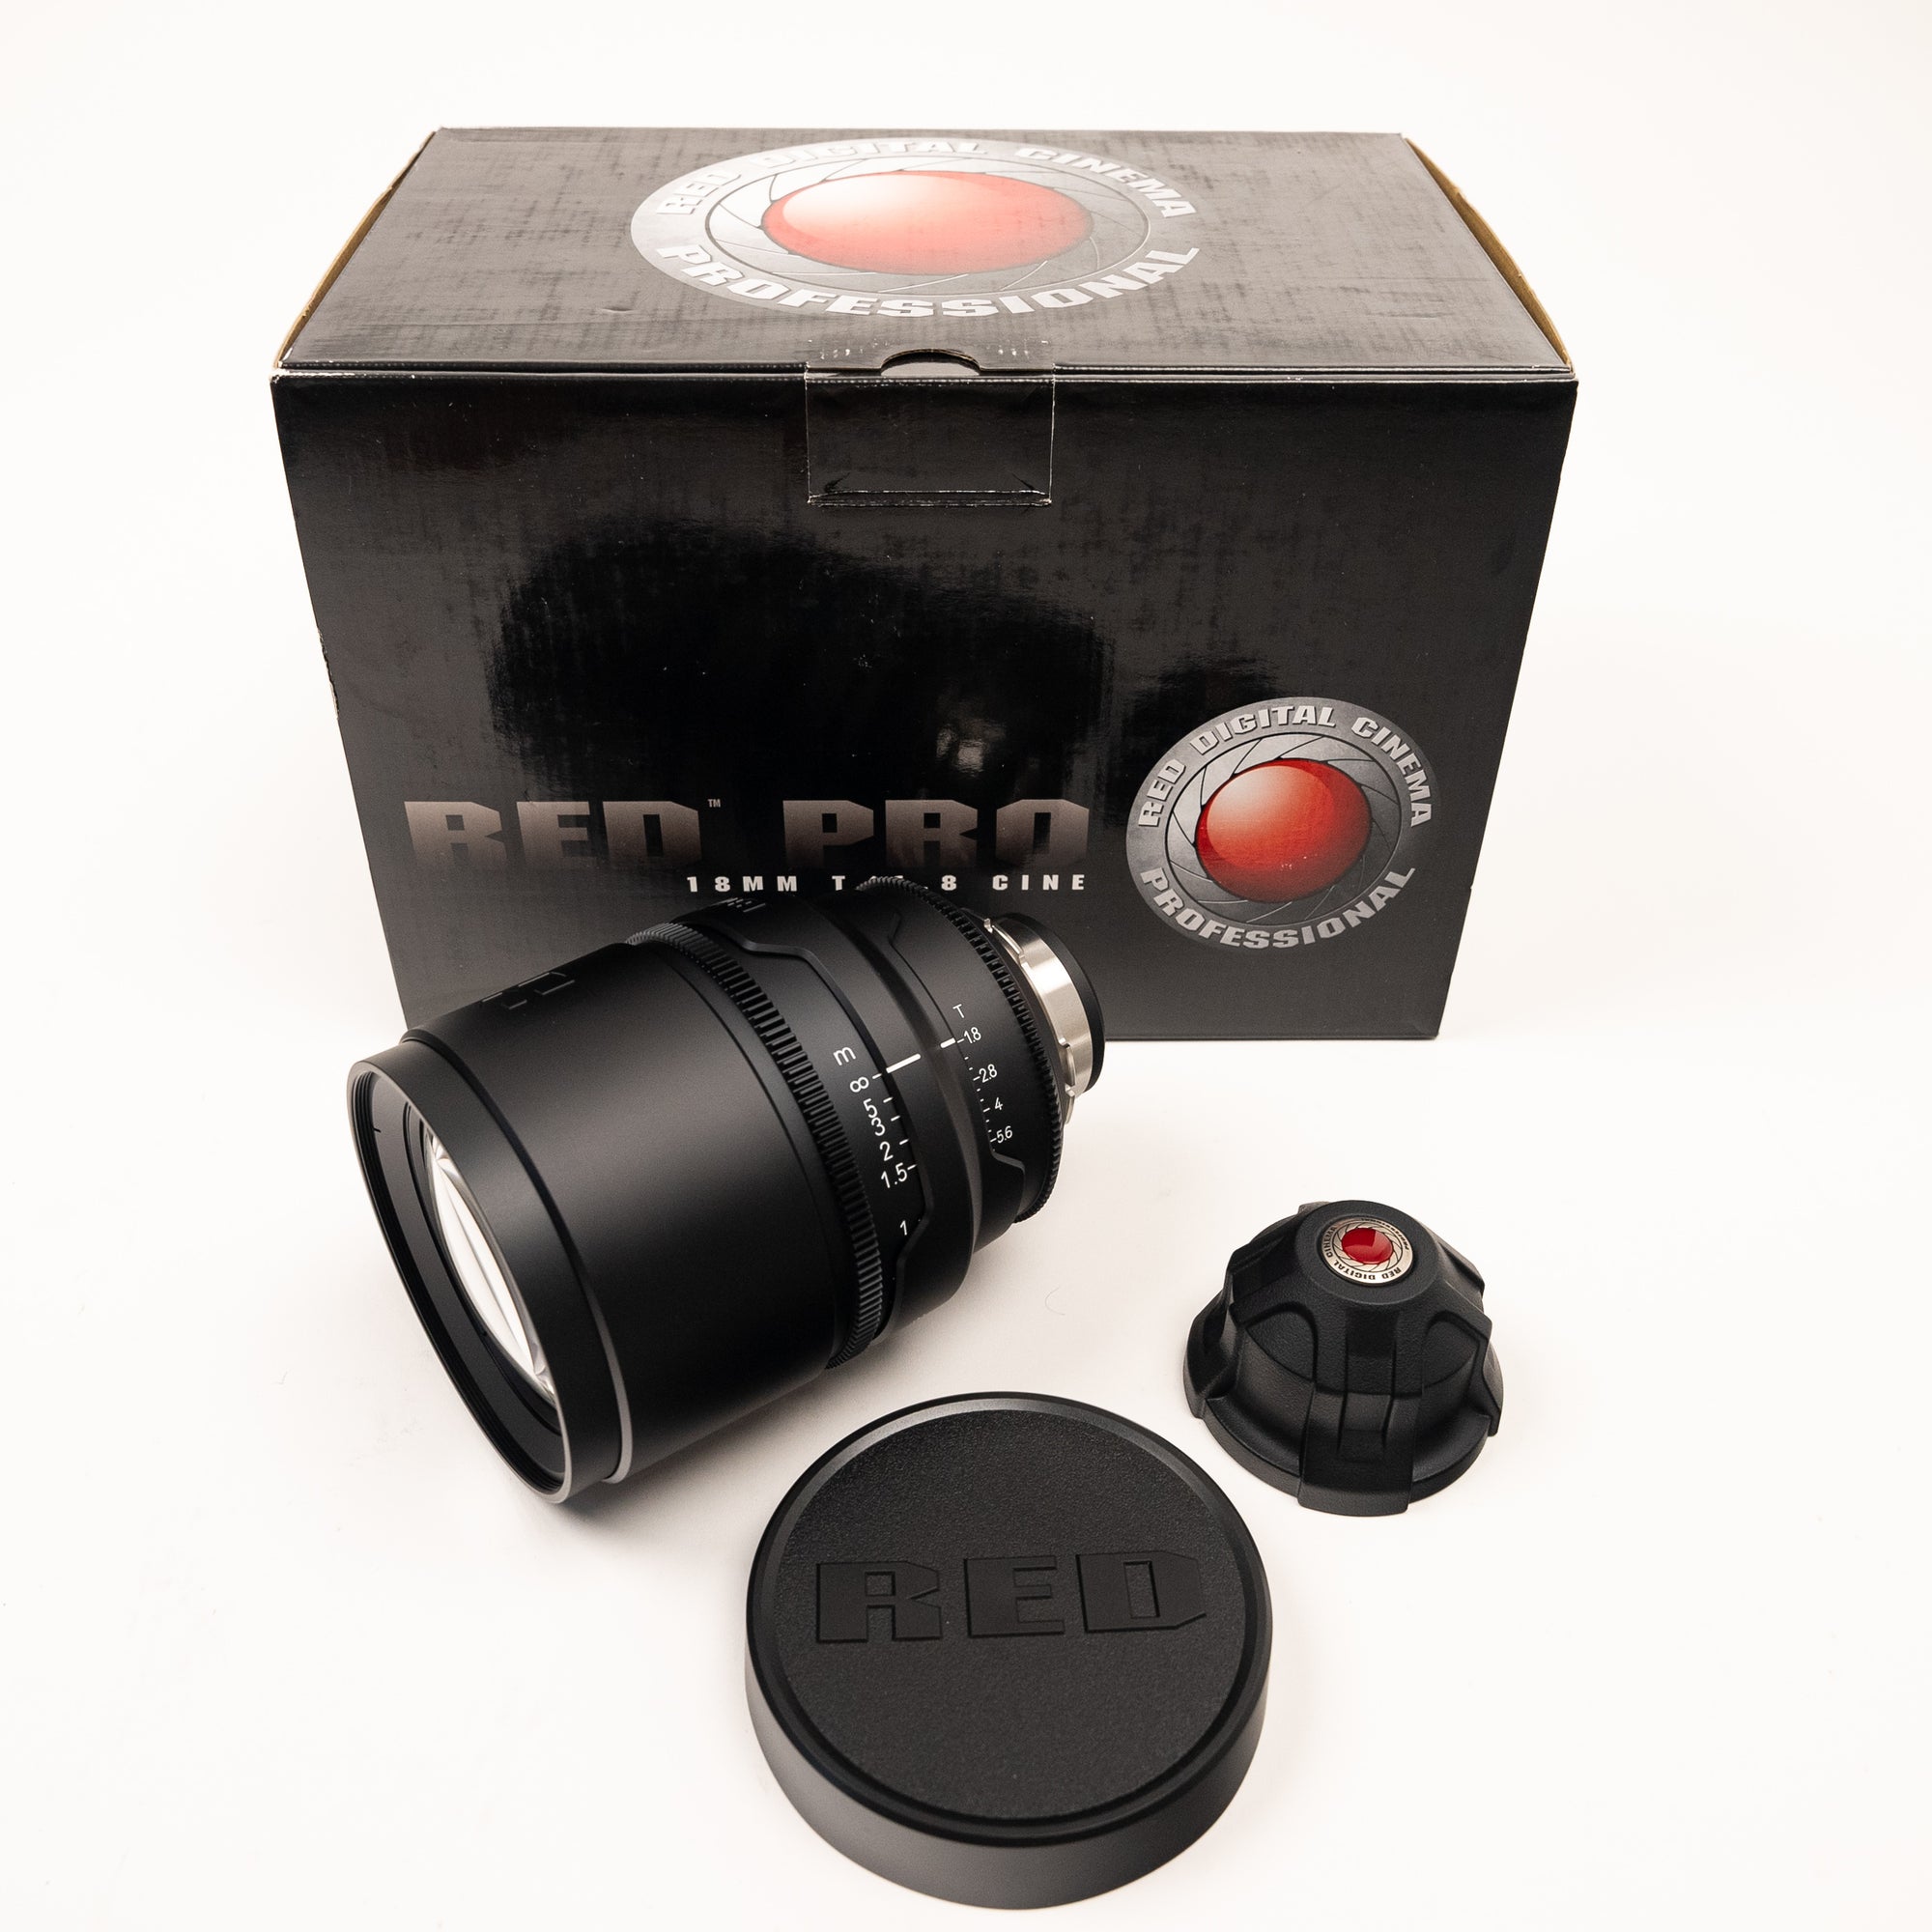 CinemaCameras.com - 6.1.22 - Photo - Selects (374 of 399) - RED Pro 18mm T:1.8 (Metrics).jpg